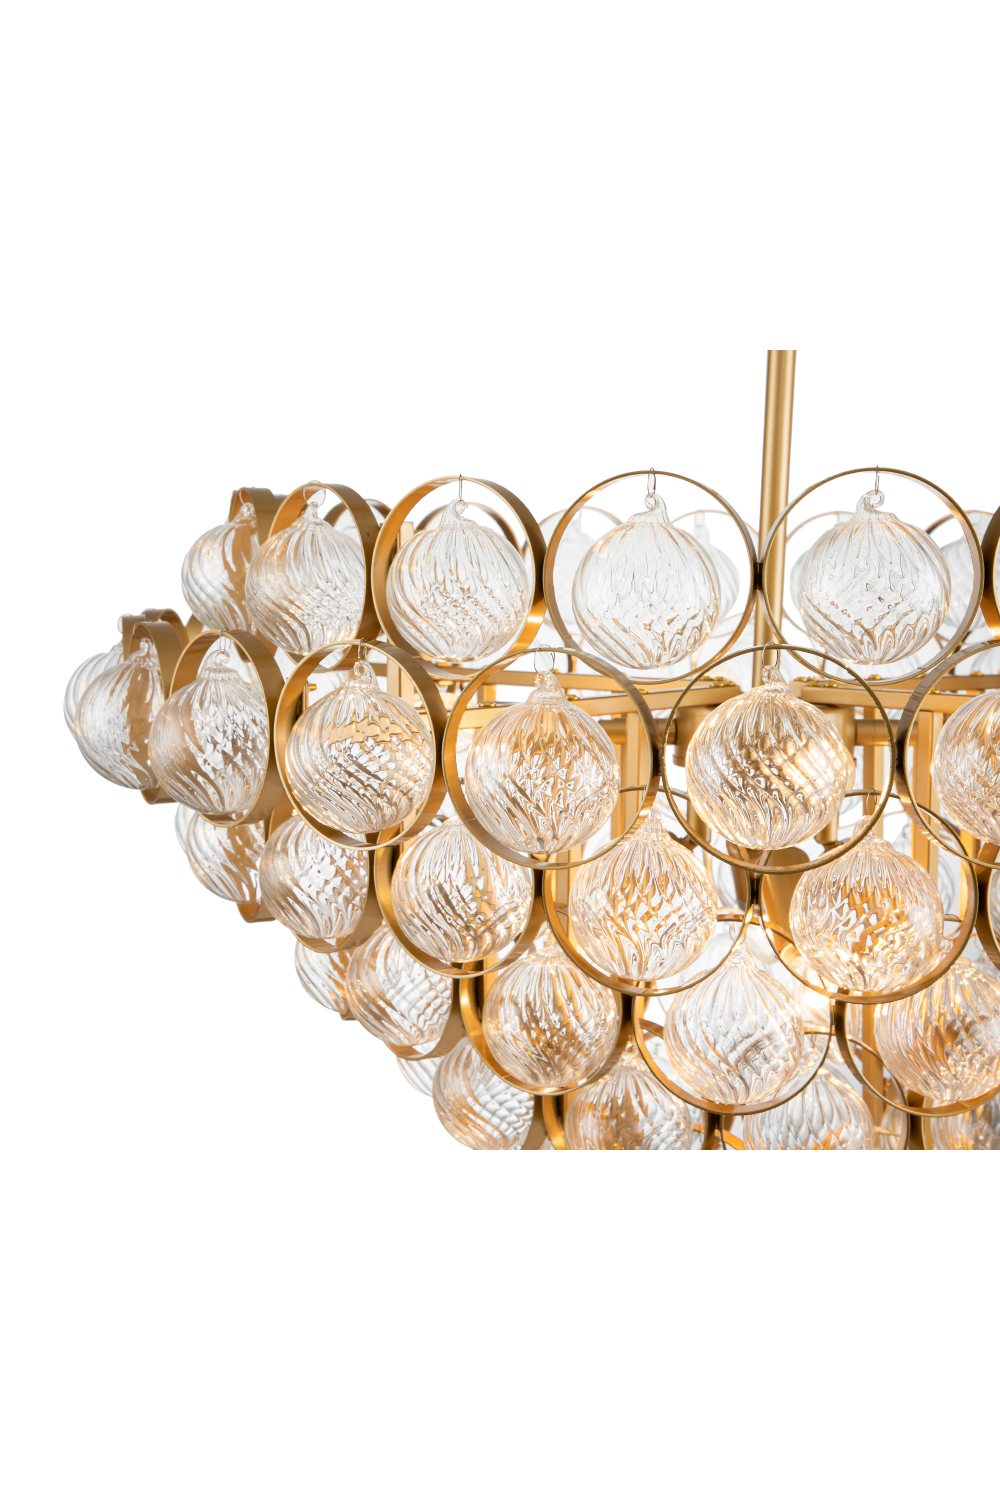 Gold Ringed Crystal Orbs Pendant Lamp | Liang & Eimil Otelo | OROA.com